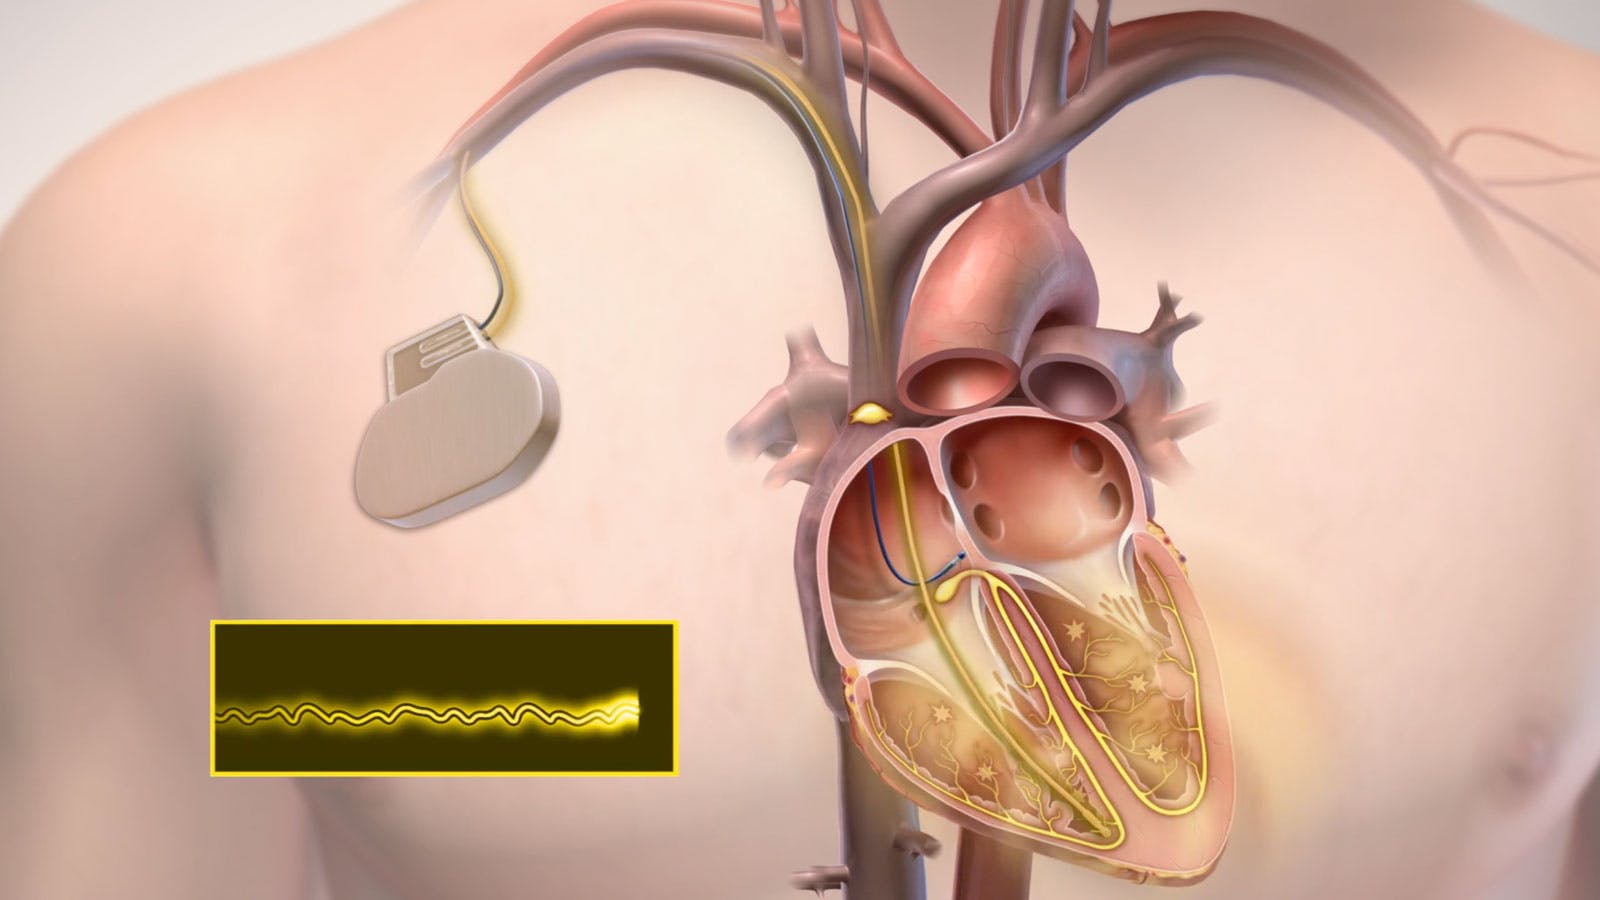 Implantable cardioverter defibrillator (ICD